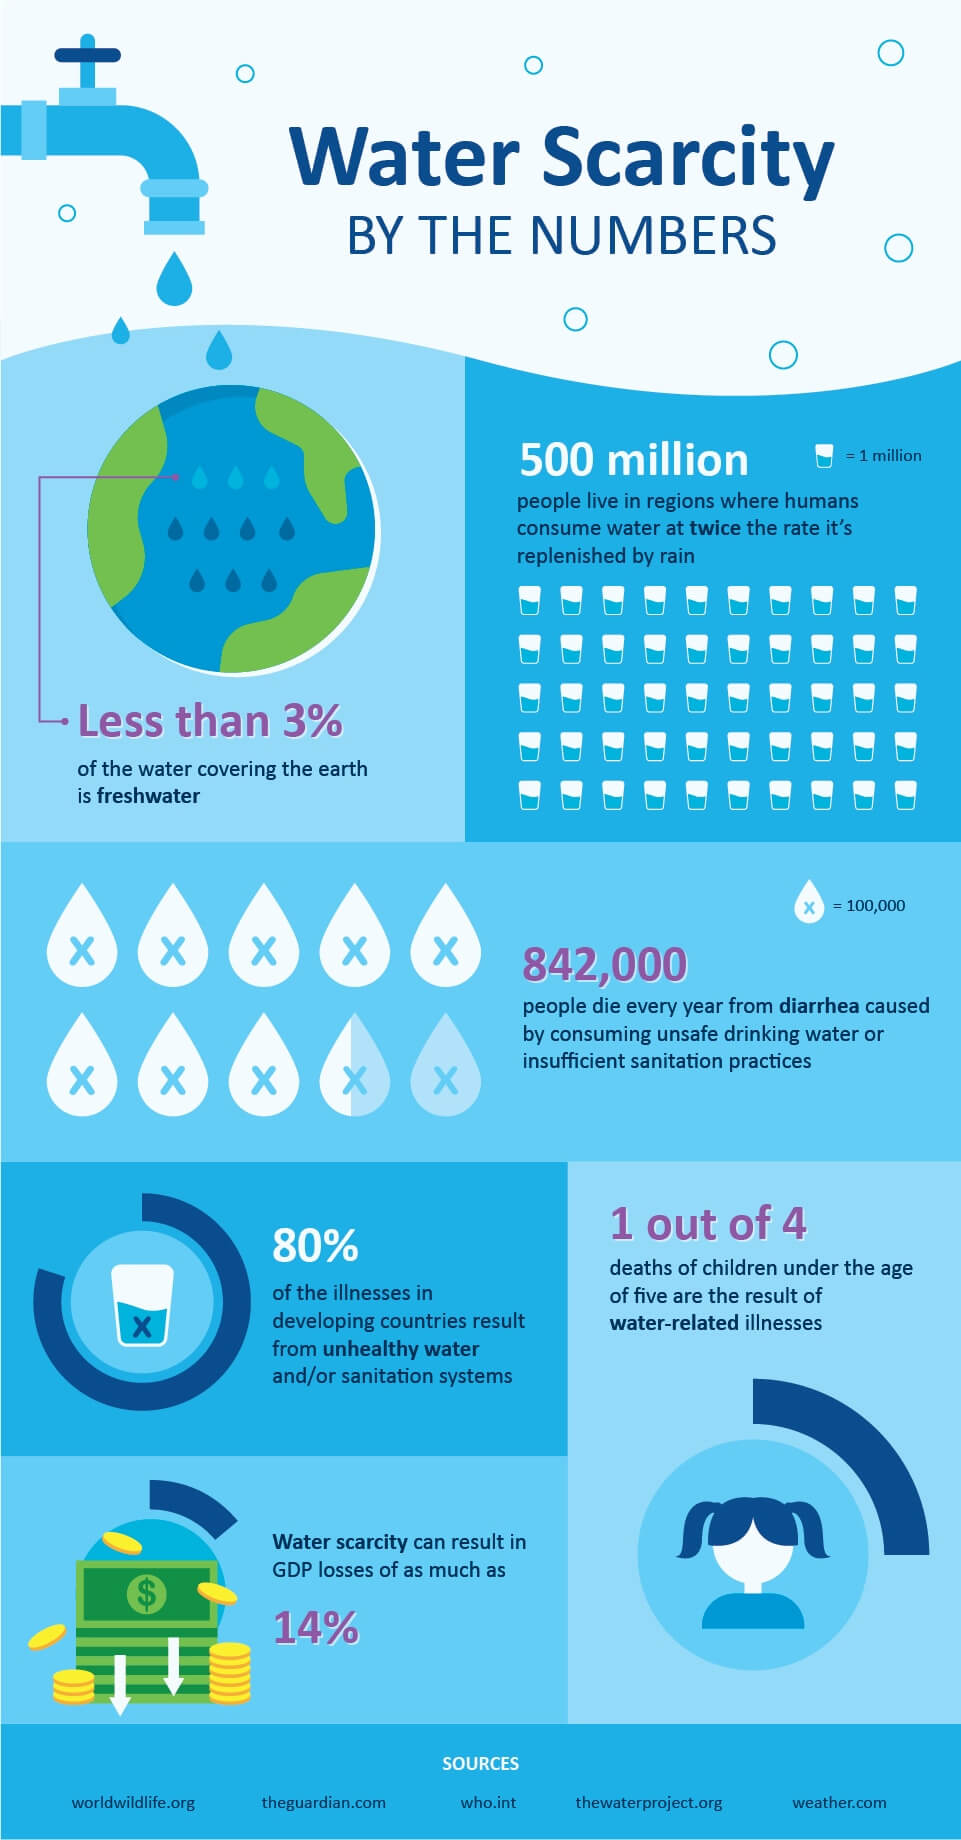 solve water scarcity problem